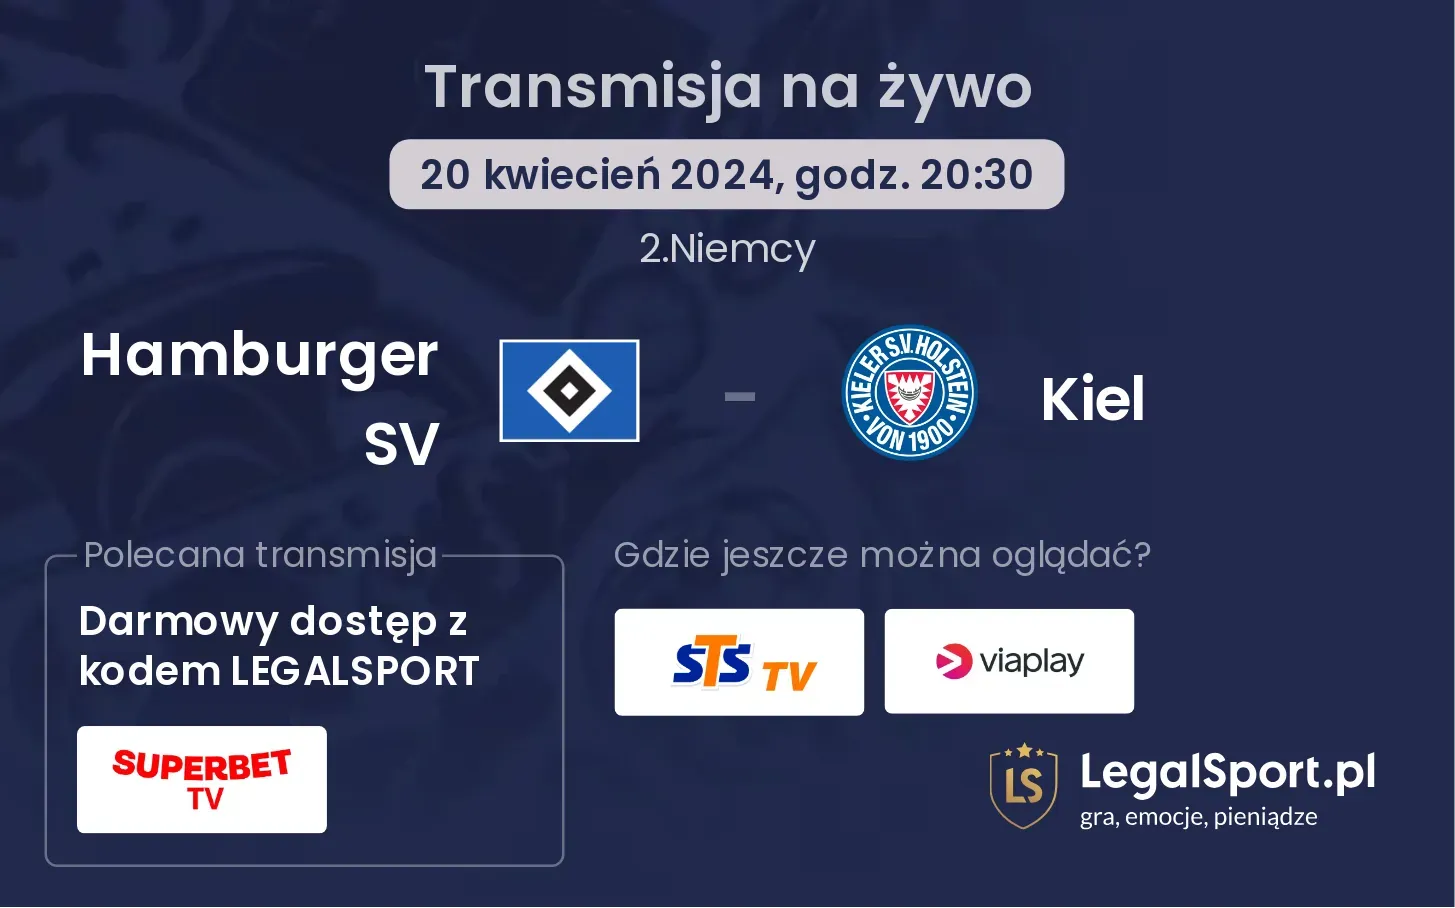 Hamburger SV - Kiel transmisja na żywo